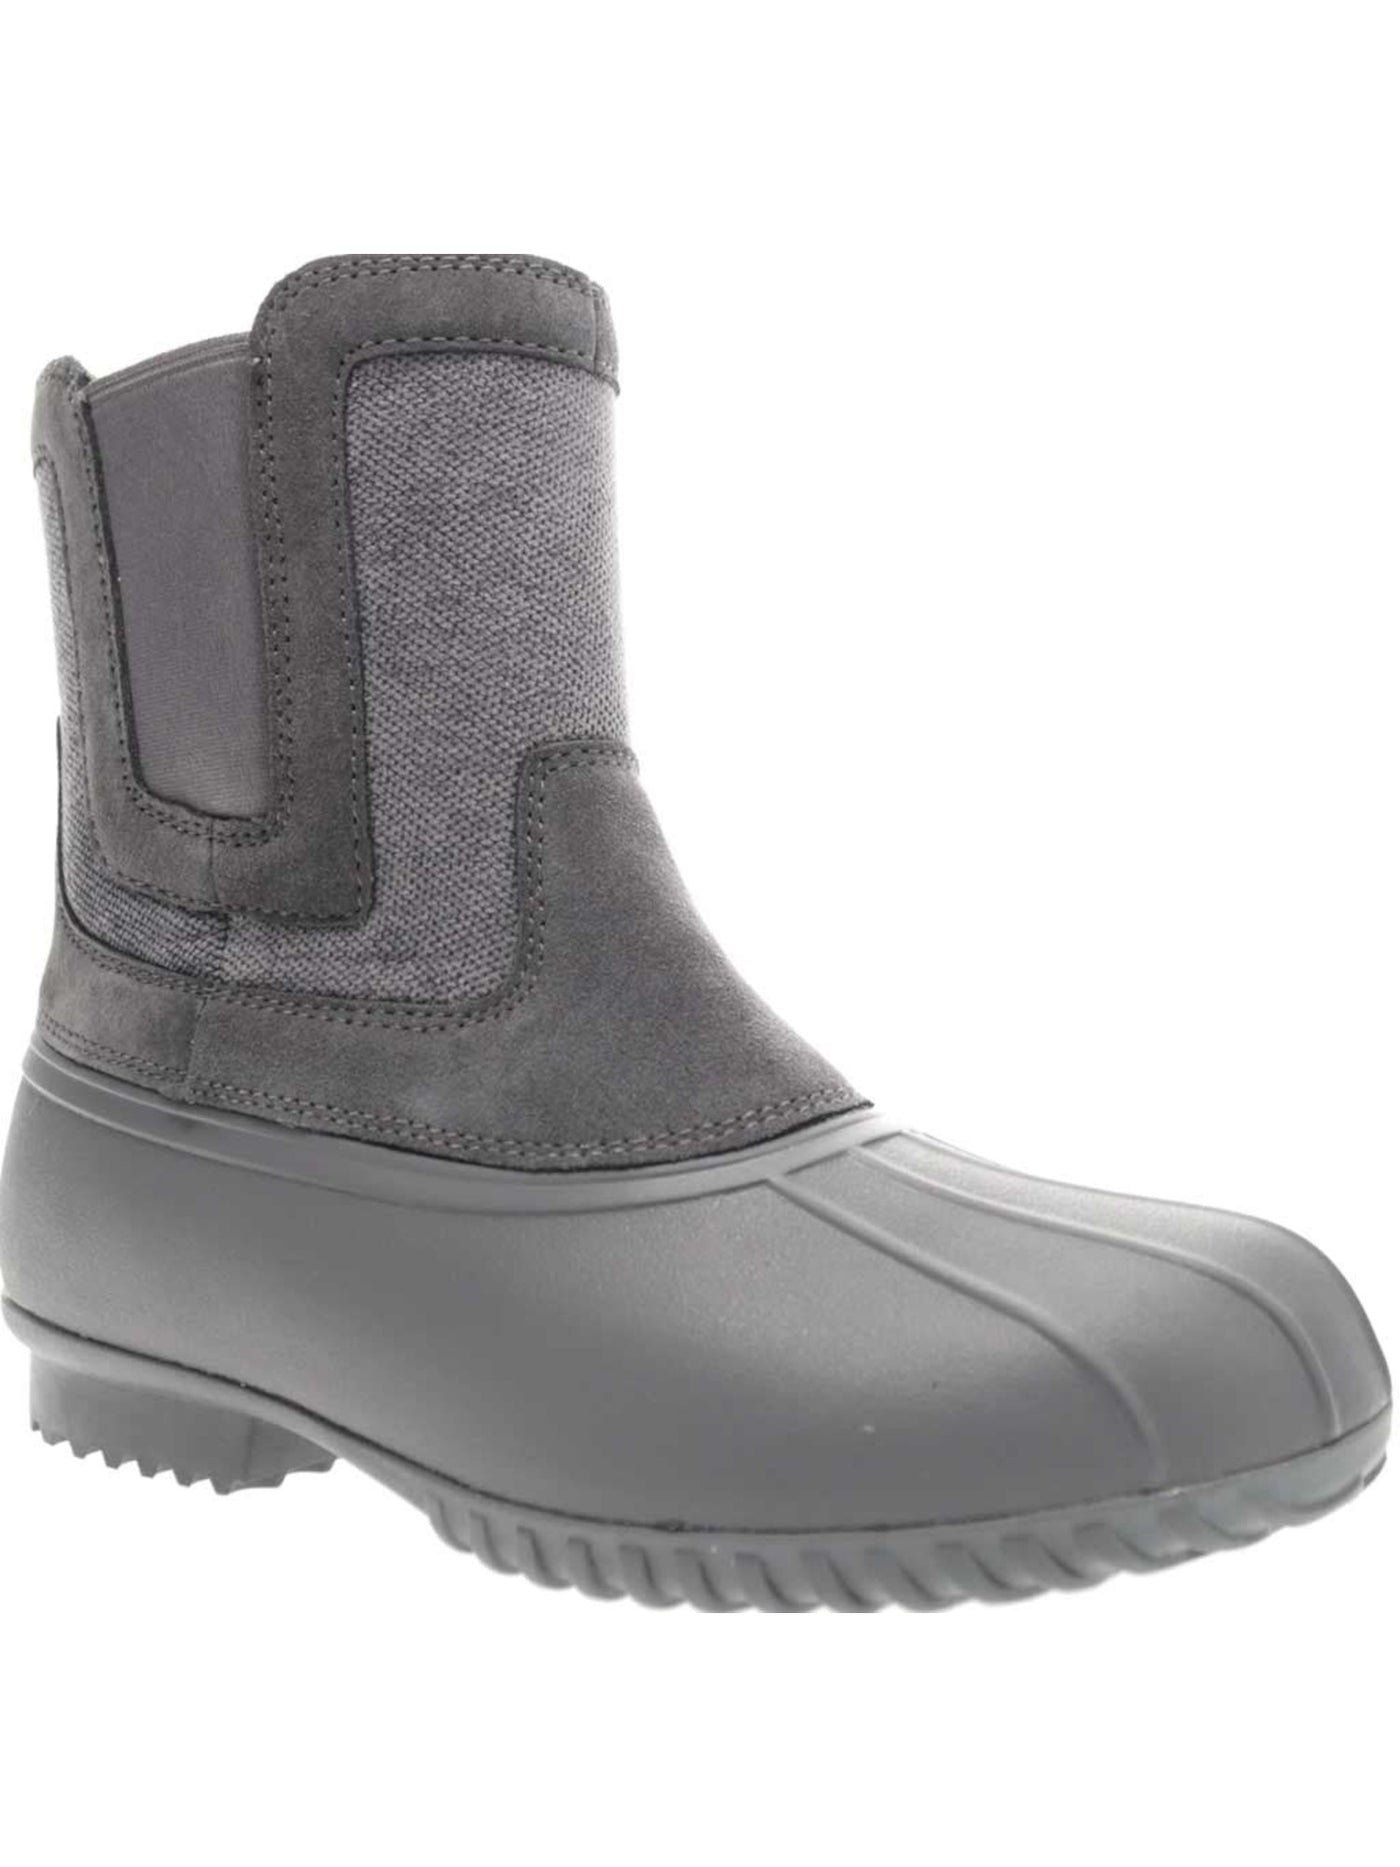 PROPET Womens Gray Goring Padded Waterproof Insulated Insley Round Toe Zip-Up Duck Boots 8.5 EEEE